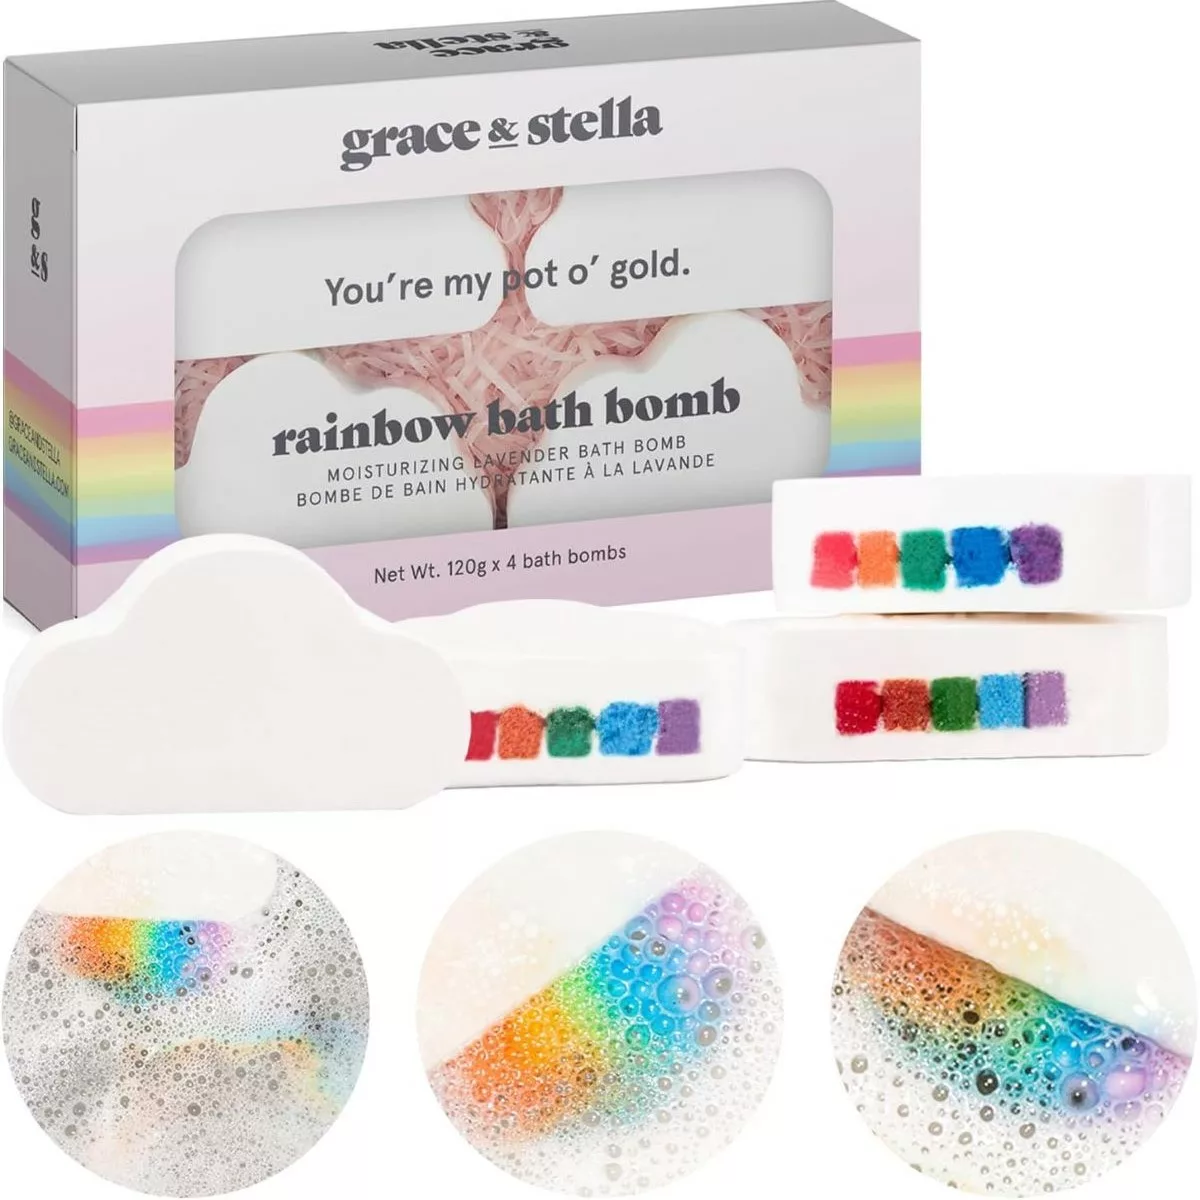 Rainbow Bath Bombs from Grace & Stella